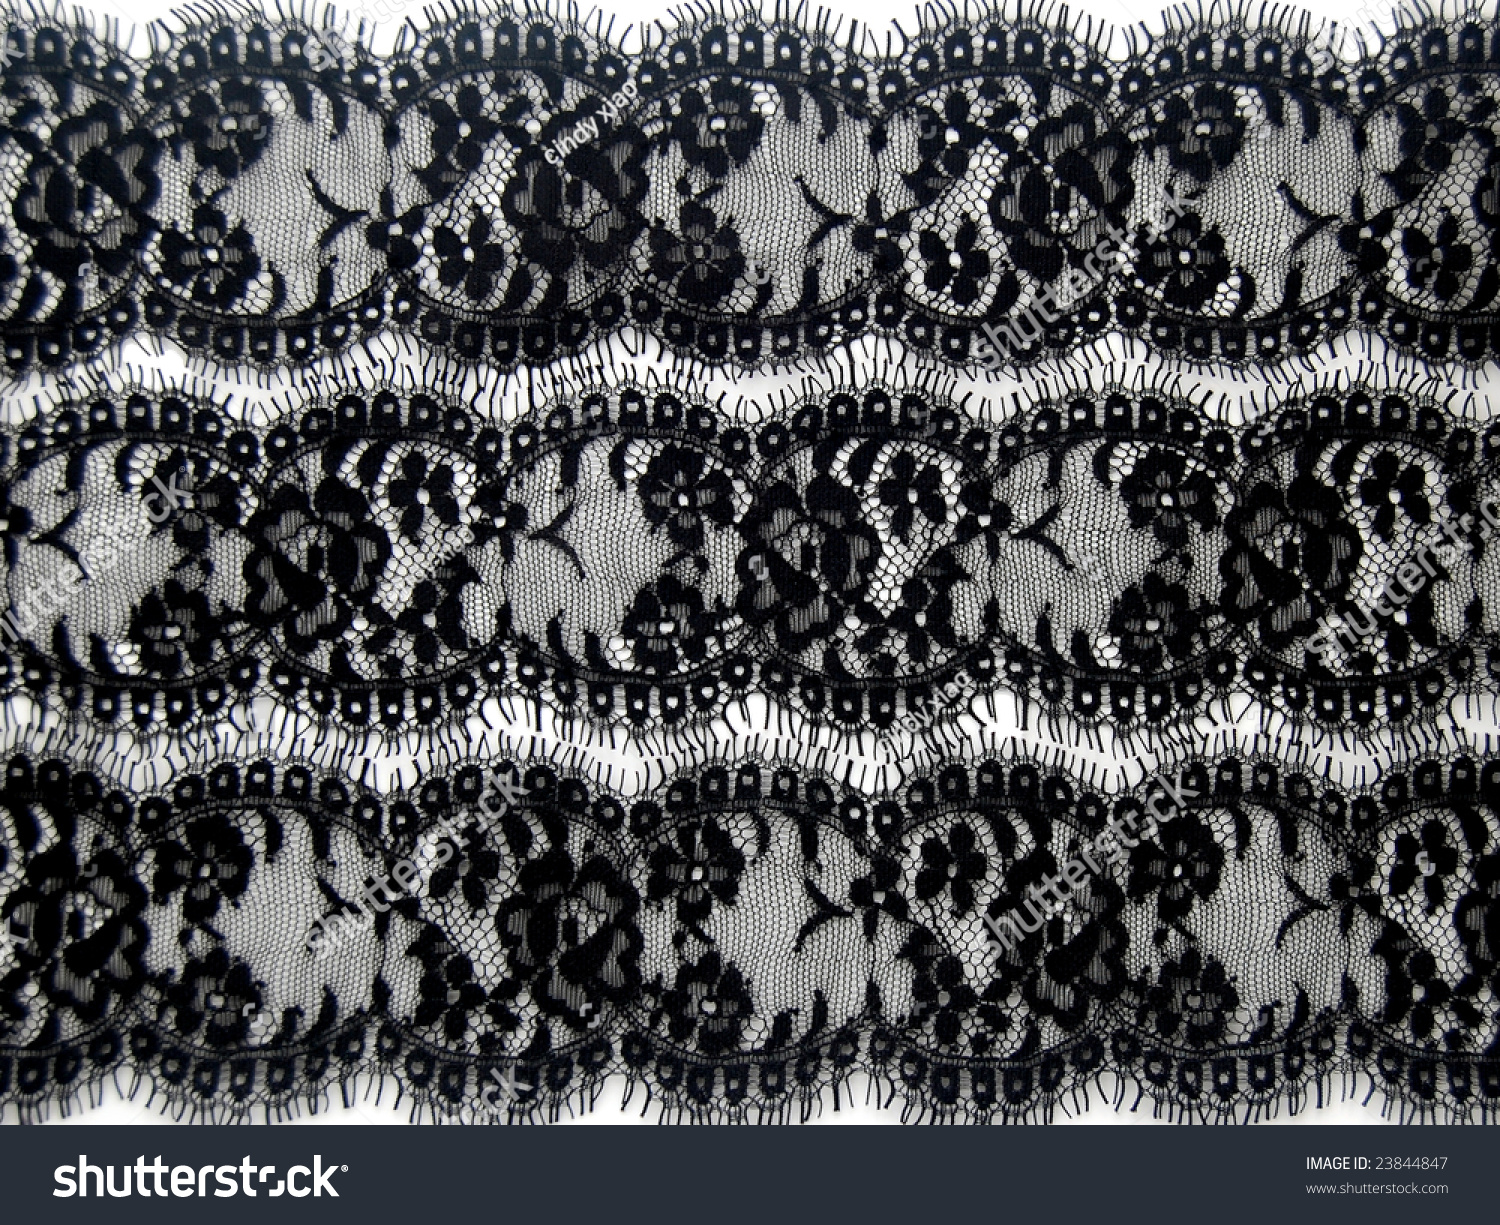 Black Lace Stock Photo 23844847 : Shutterstock